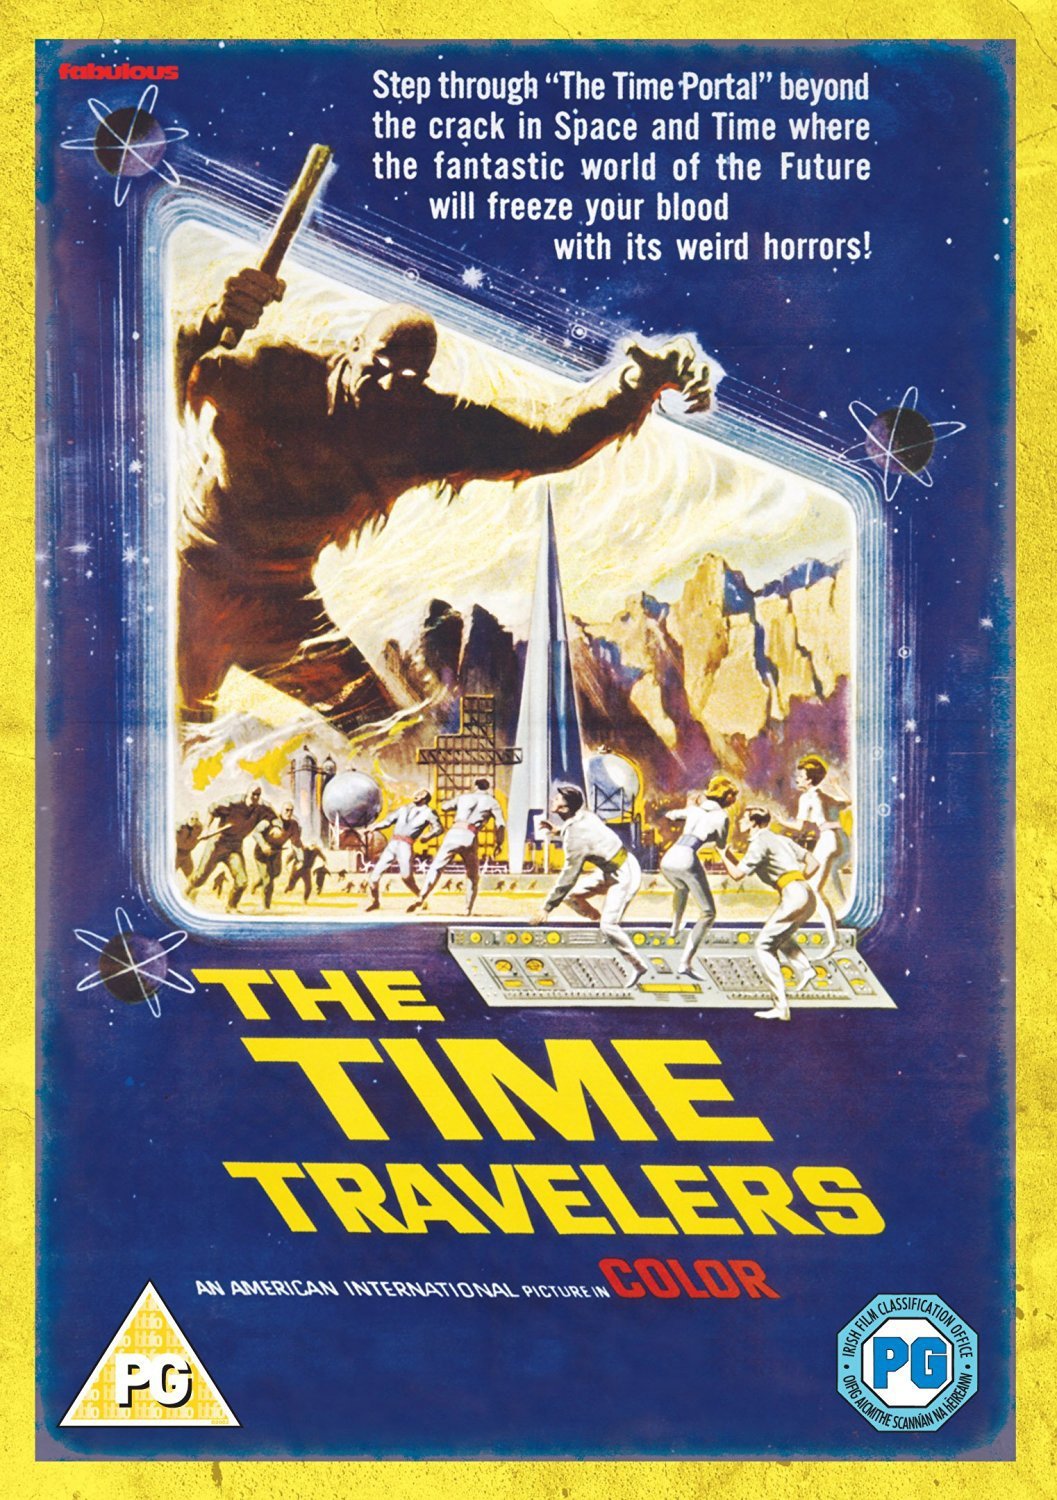 The Time Travelers (1964) starring Merry Anders, Preston Foster, Philip Carey, John Hoyt, Steve Franken